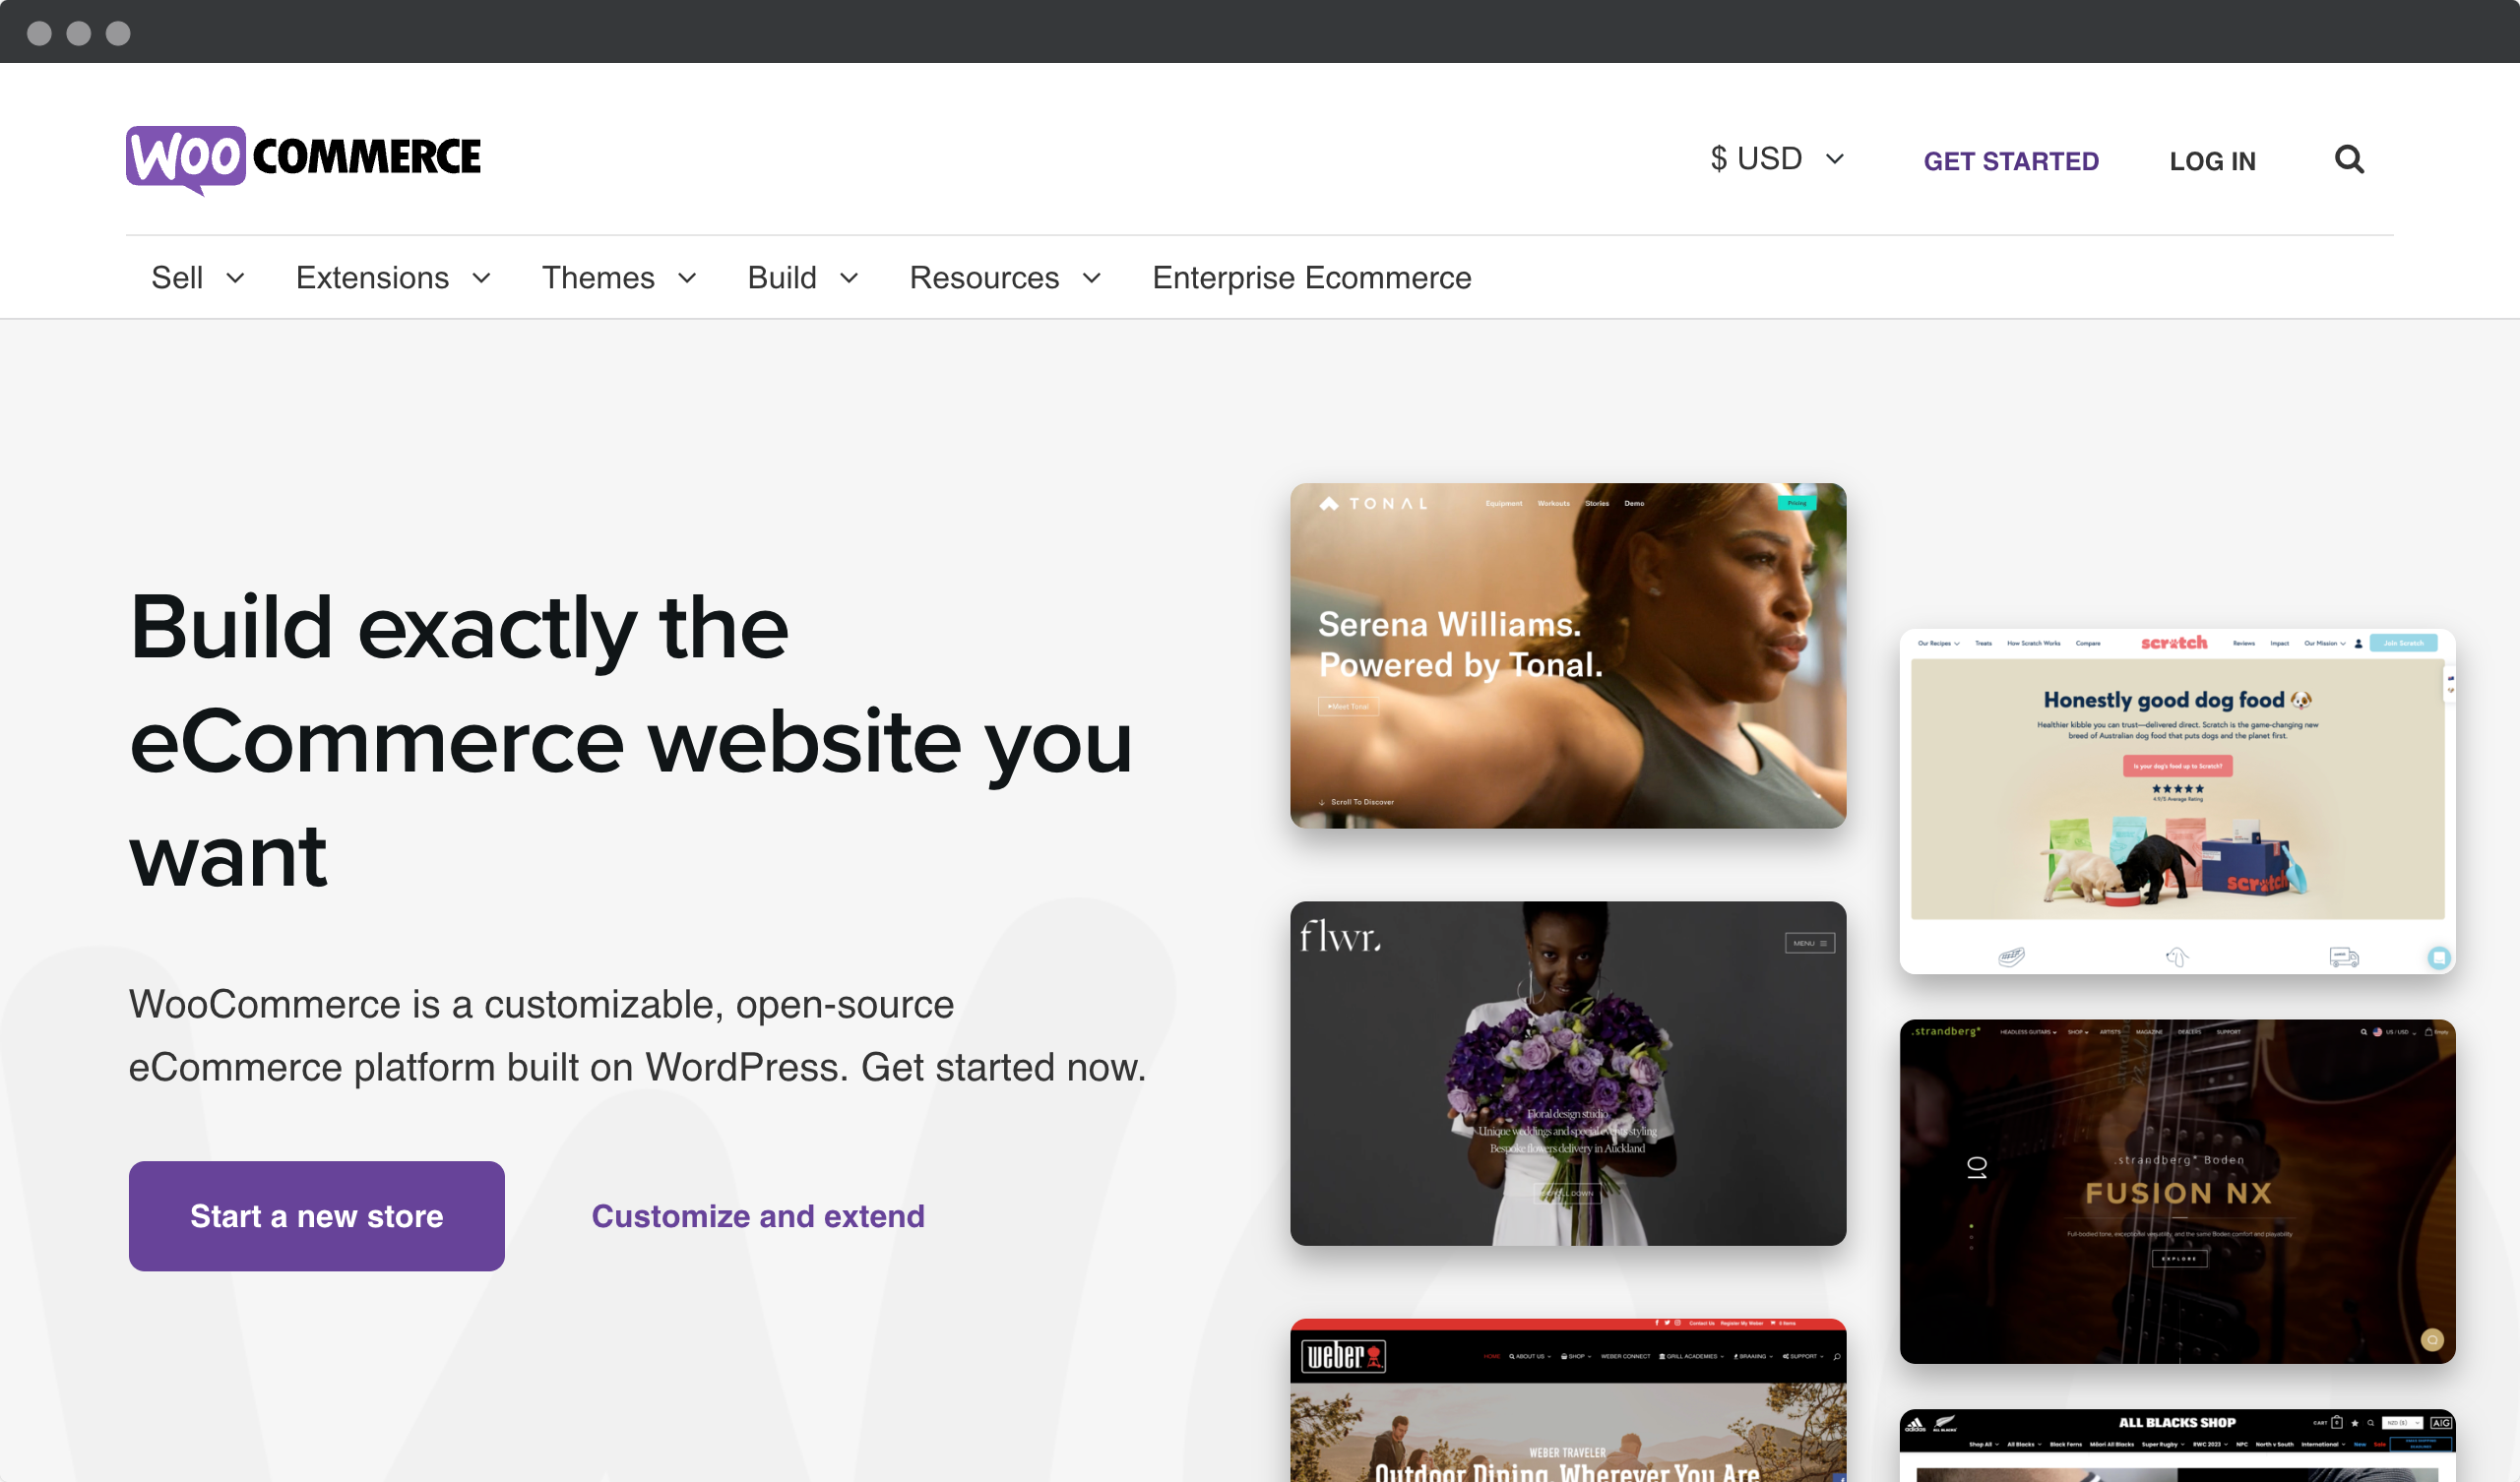 Screenshot homepage of the WooCommerce platform